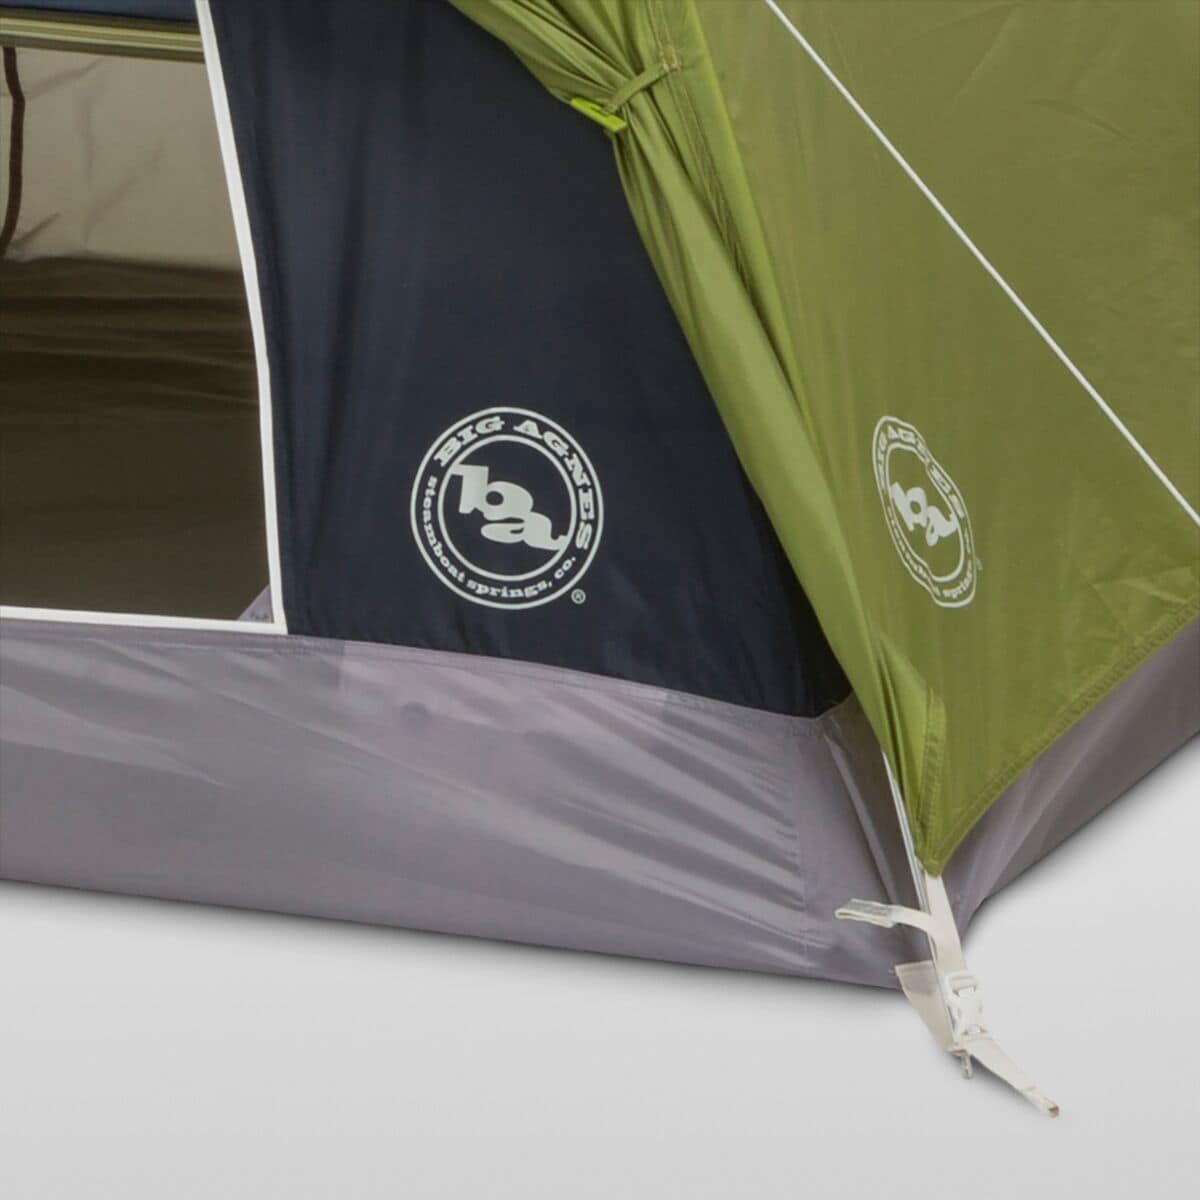 Big Agnes Blacktail 2 Tent: 2-Person 3-Season - Hike & Camp